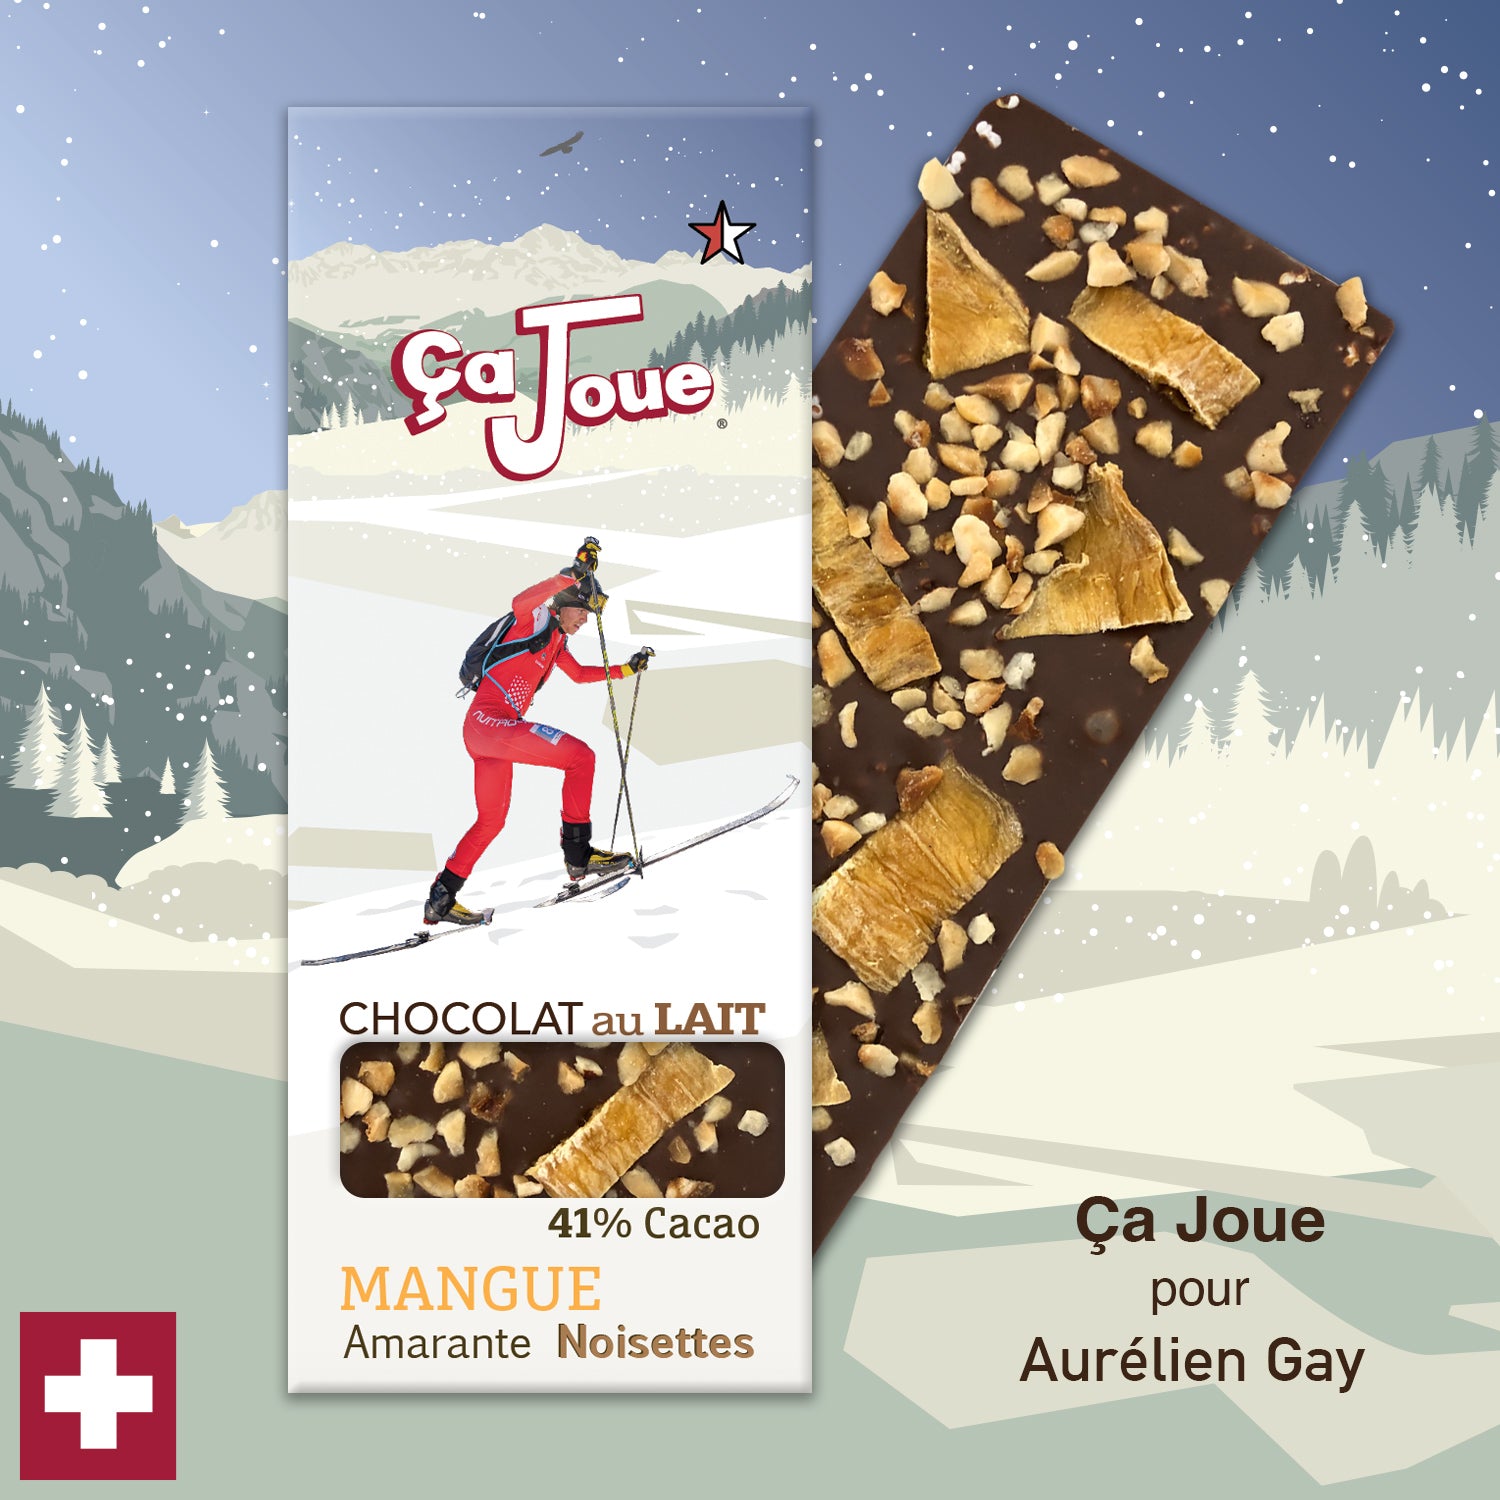 Ça Joue für Aurélien Gay (Ref-BL2) Milchschokolade aus Val de Bagnes